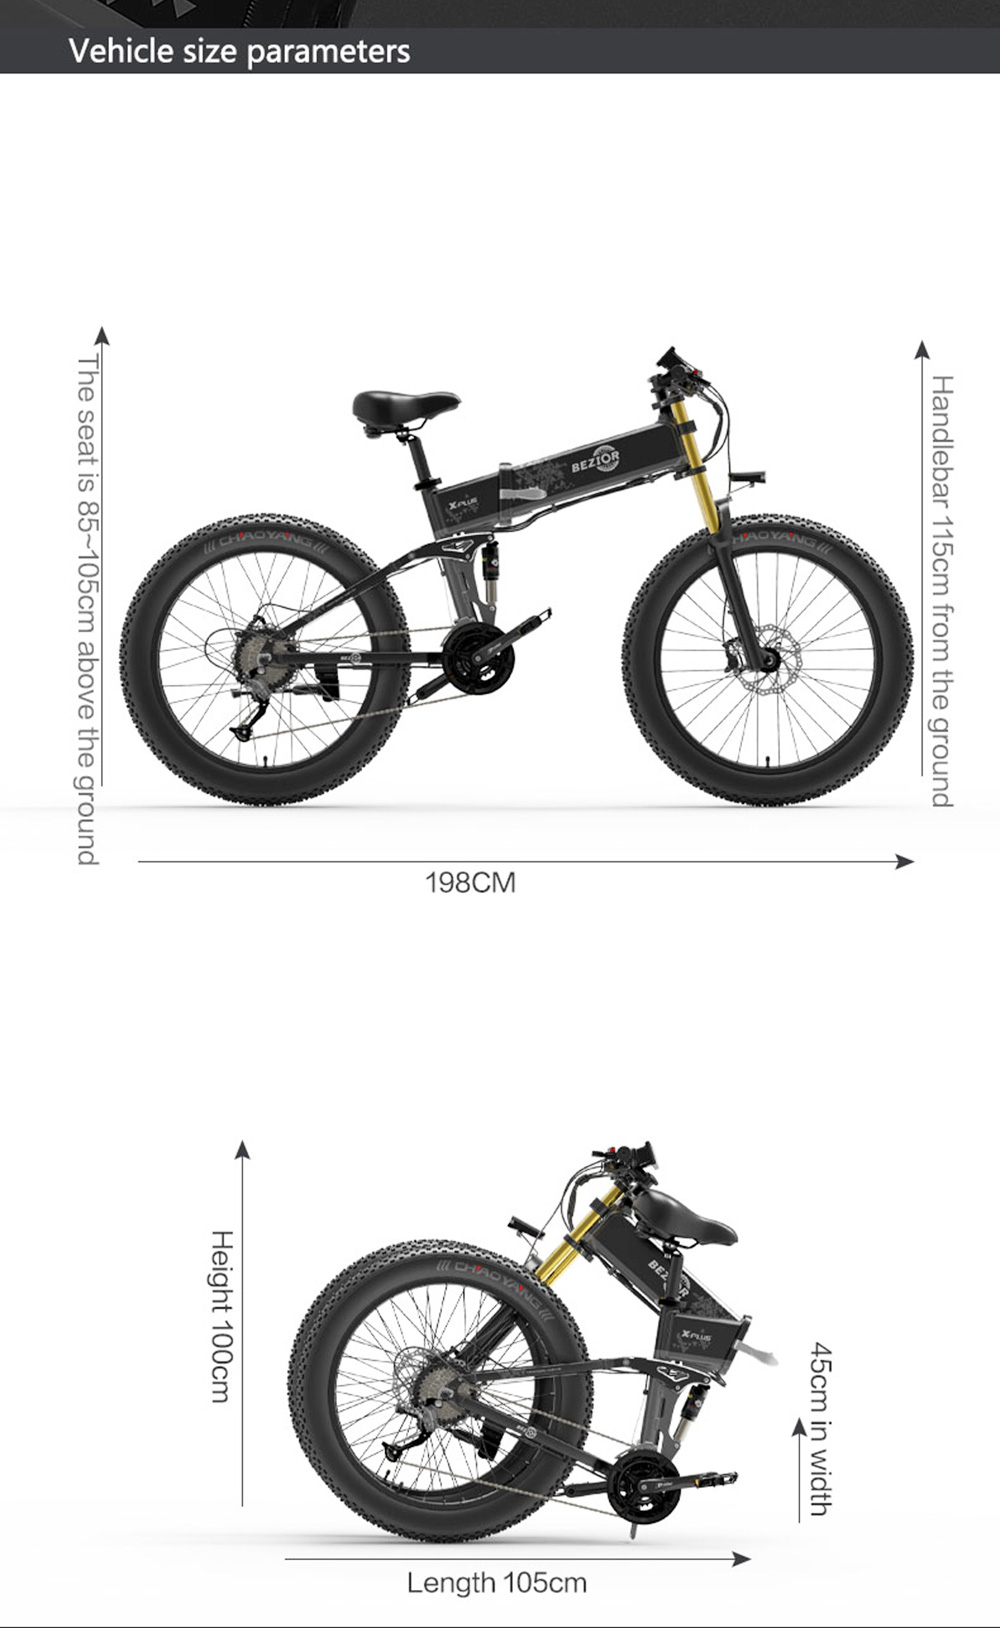 Bicicleta eléctrica BEZIOR X-PLUS 26 pulgadas 1500W 40KM/H 48V 17,5Ah batería negra